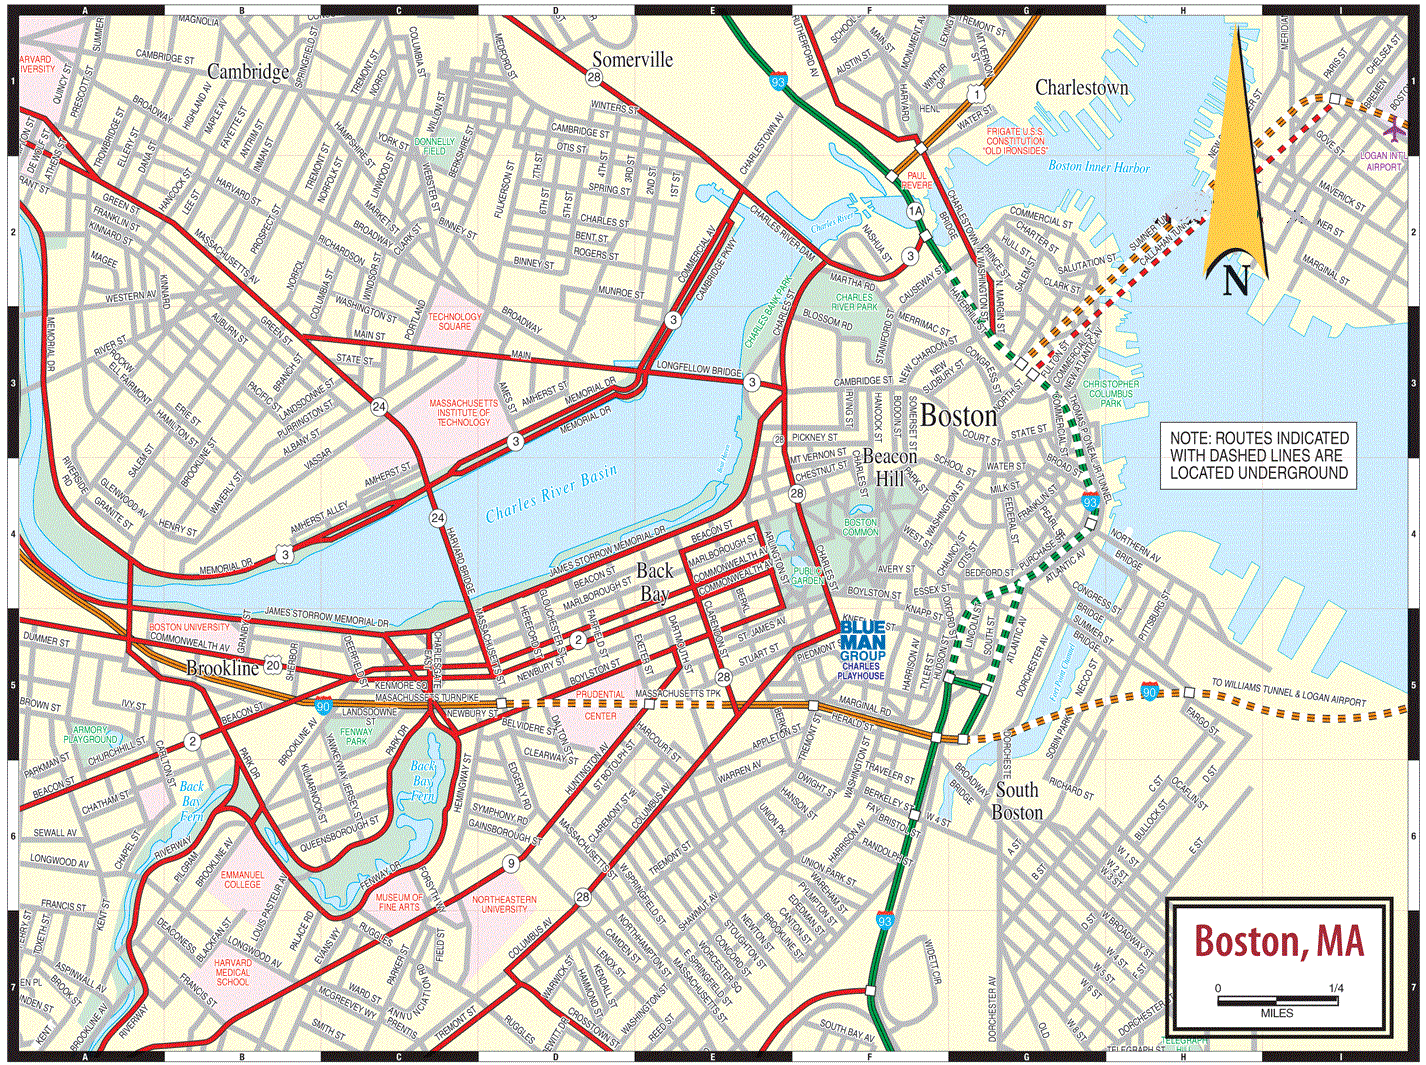 Boston, Massachusetts Road and Highway Map